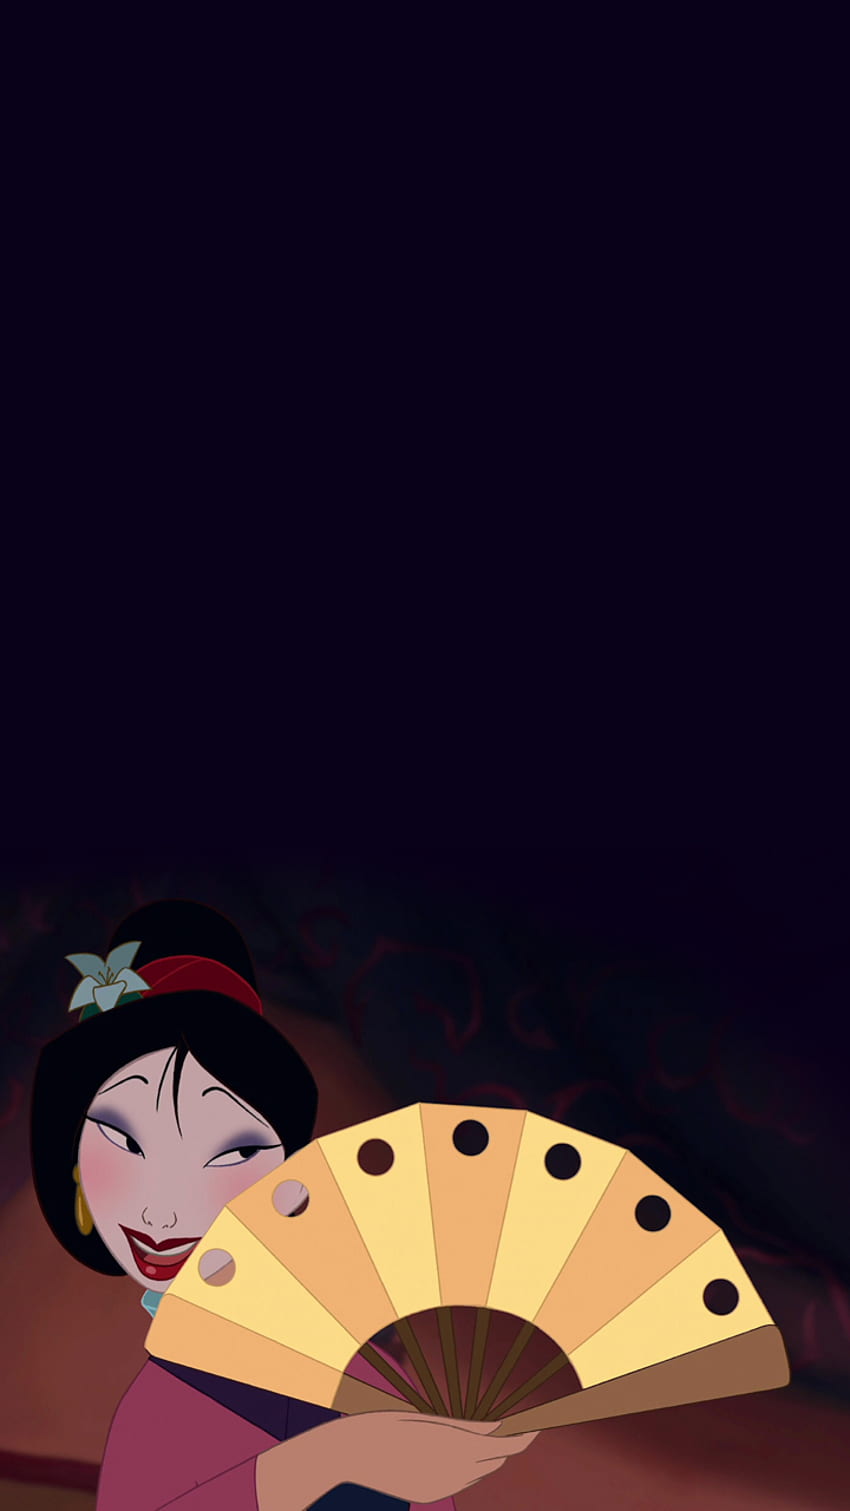 Mulan from Disney's Mulan animated movie holding a yellow fan. - Mulan